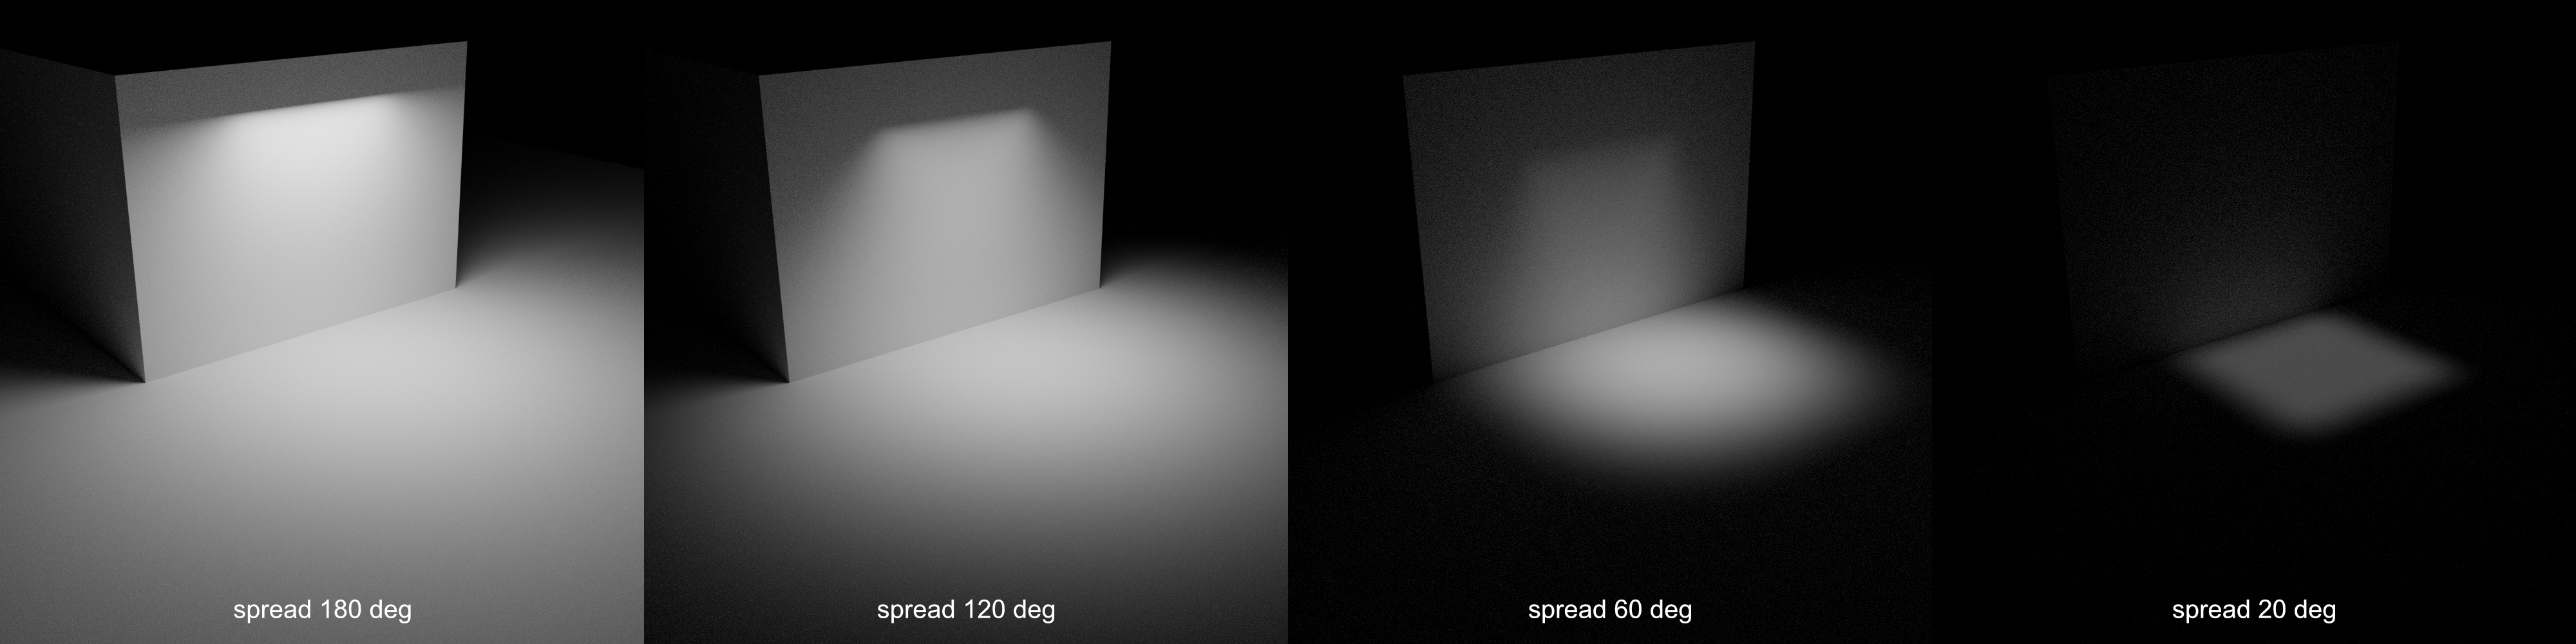 ../../_images/render_lights_light-object-area-spread.png